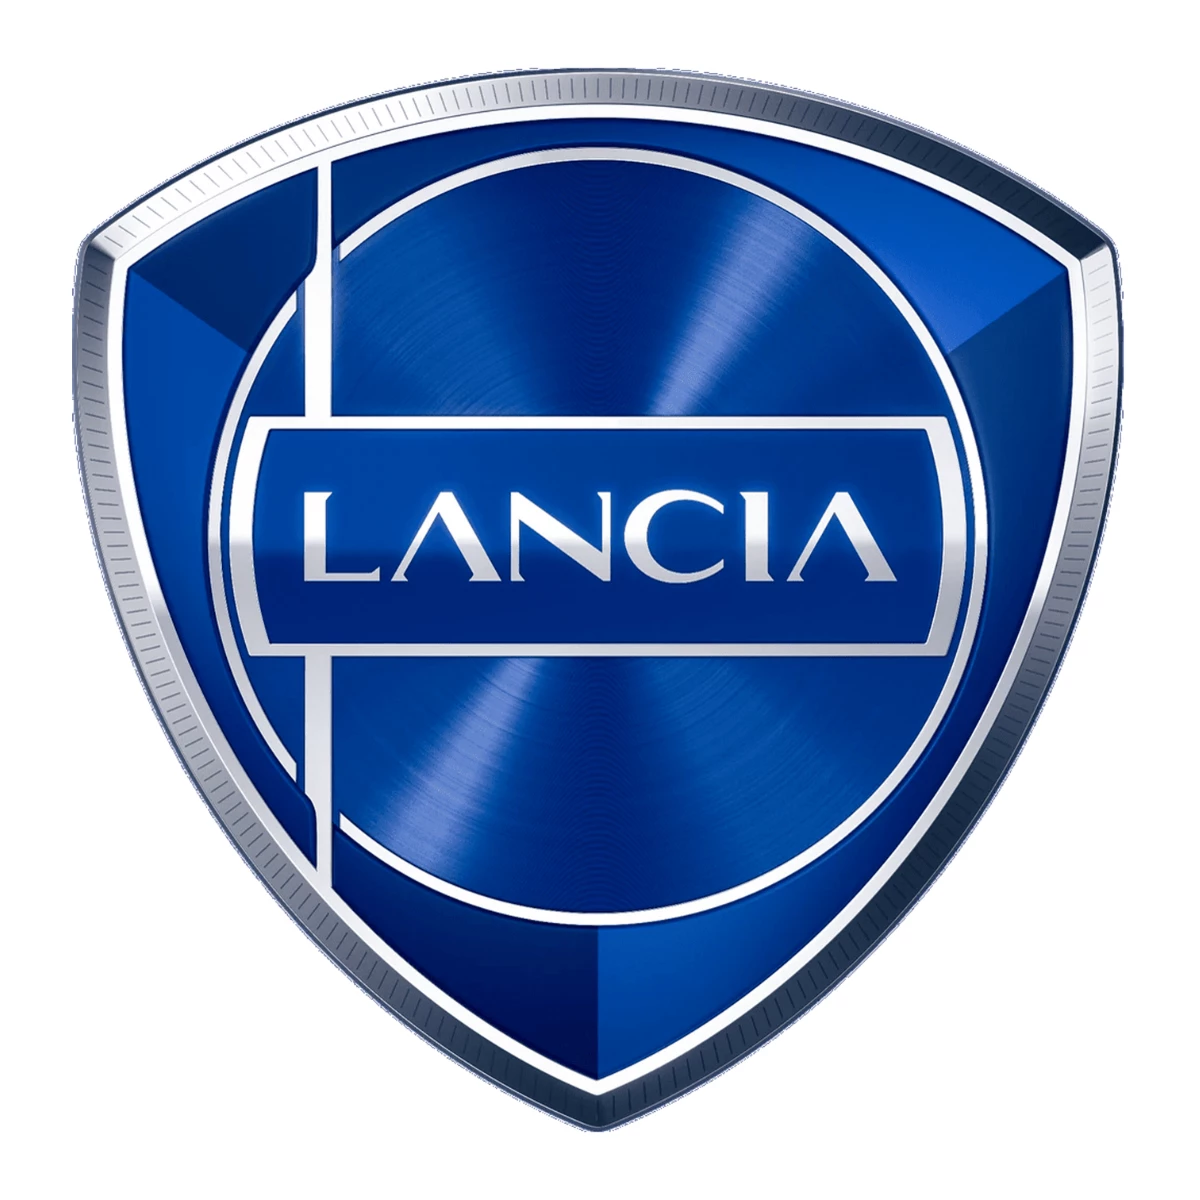 Lancia1200x1200